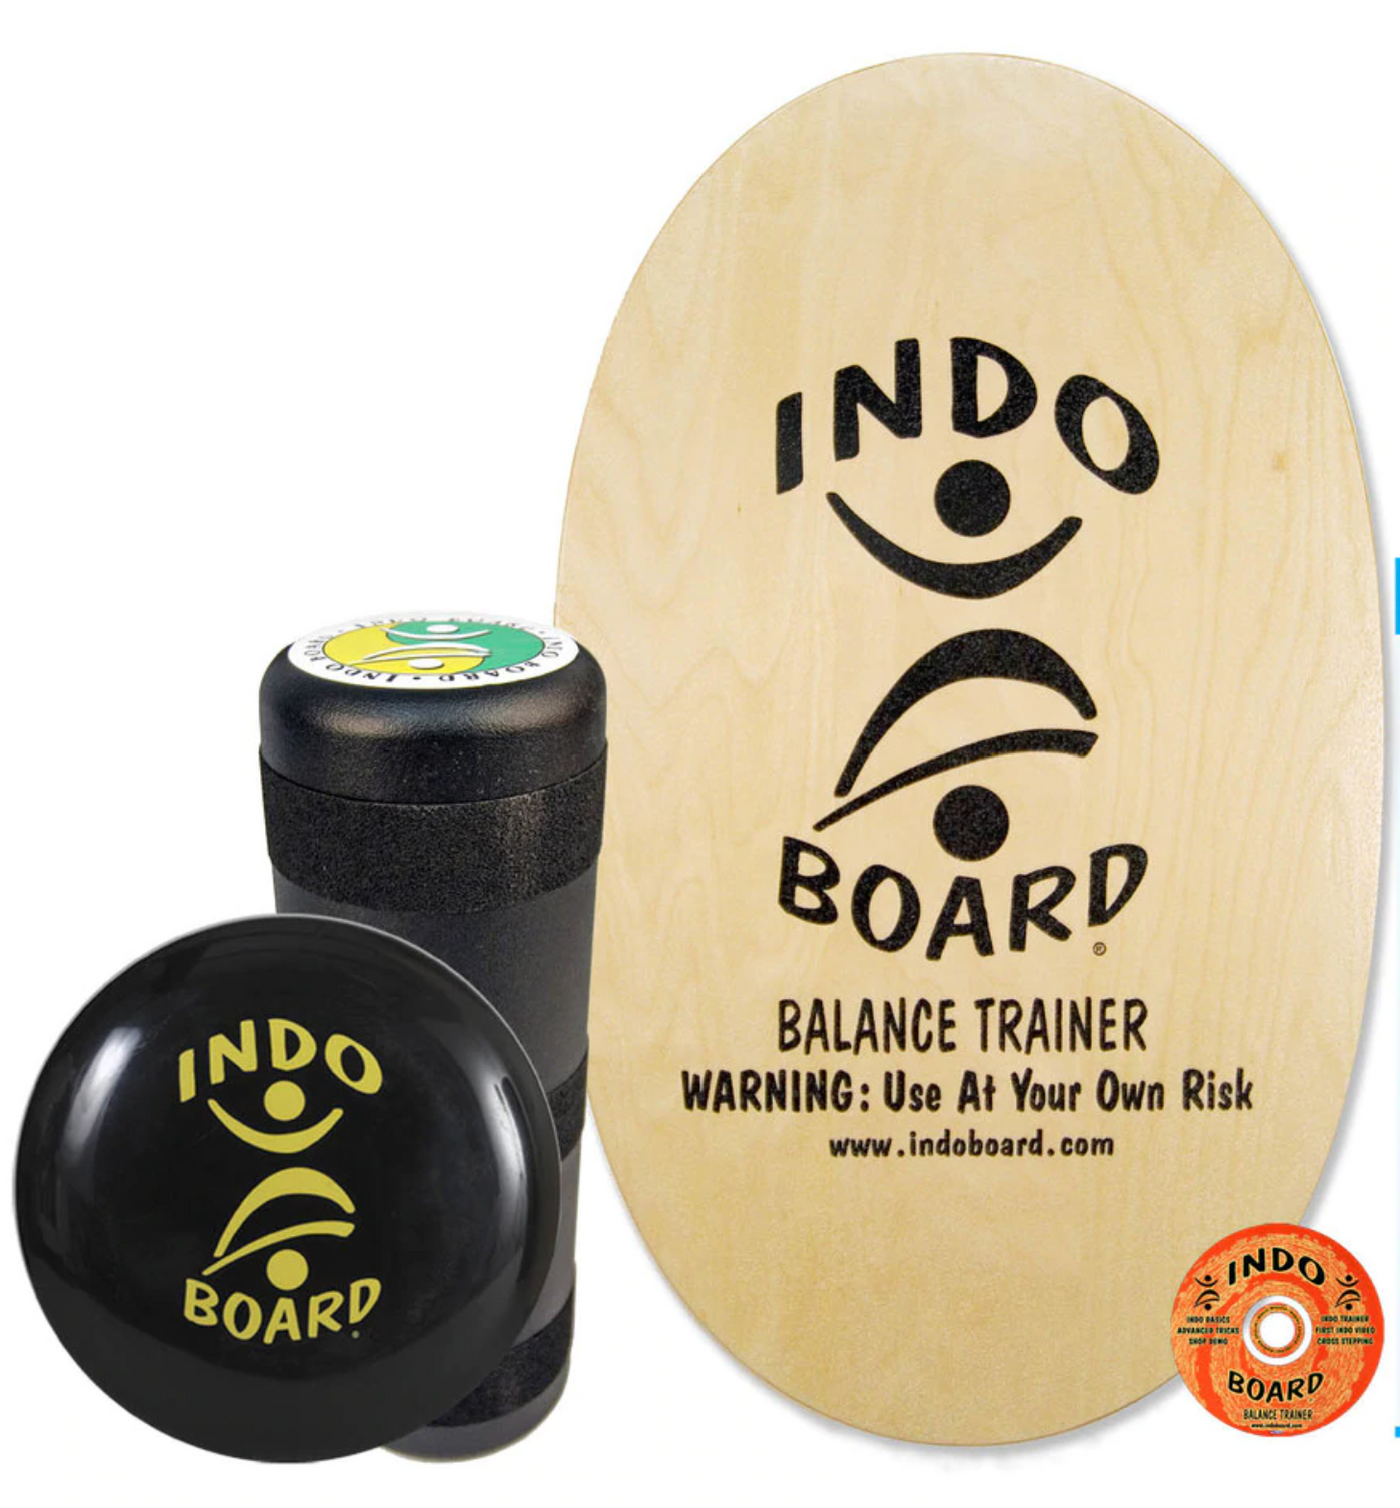 INDO BOARD - Original Training Package